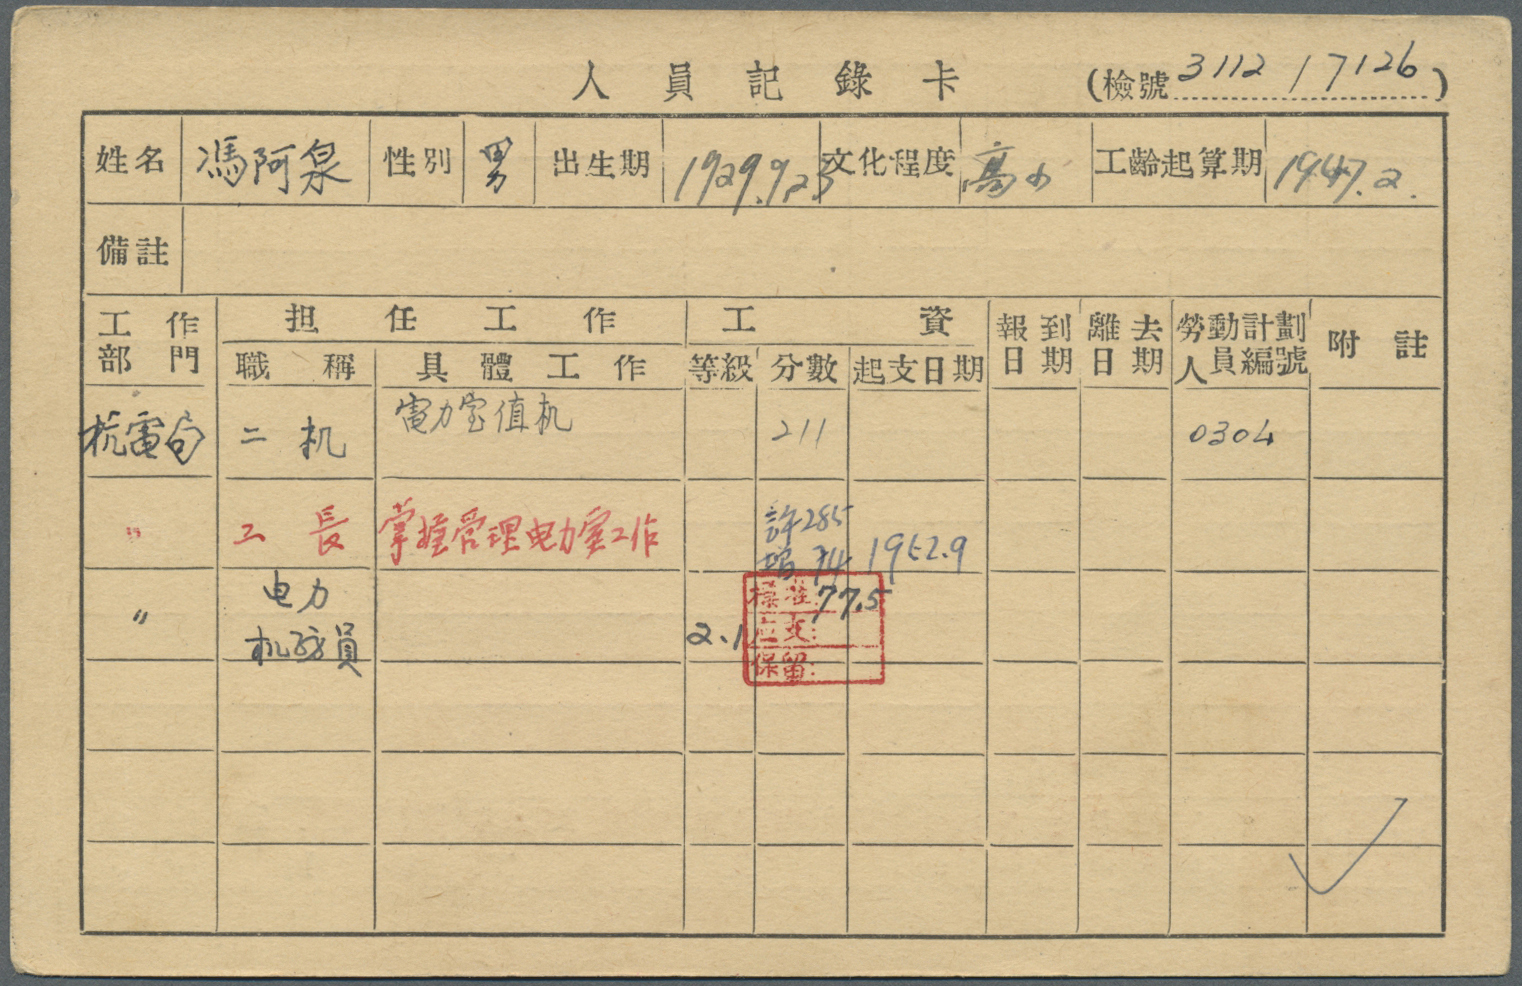 GA China - Ganzsachen: 1940 (ca.). Postal Stationery 'Reponse Paye' 'Sun Yat-Sen' 12c On 15c Orange For Provincial Usage - Cartes Postales